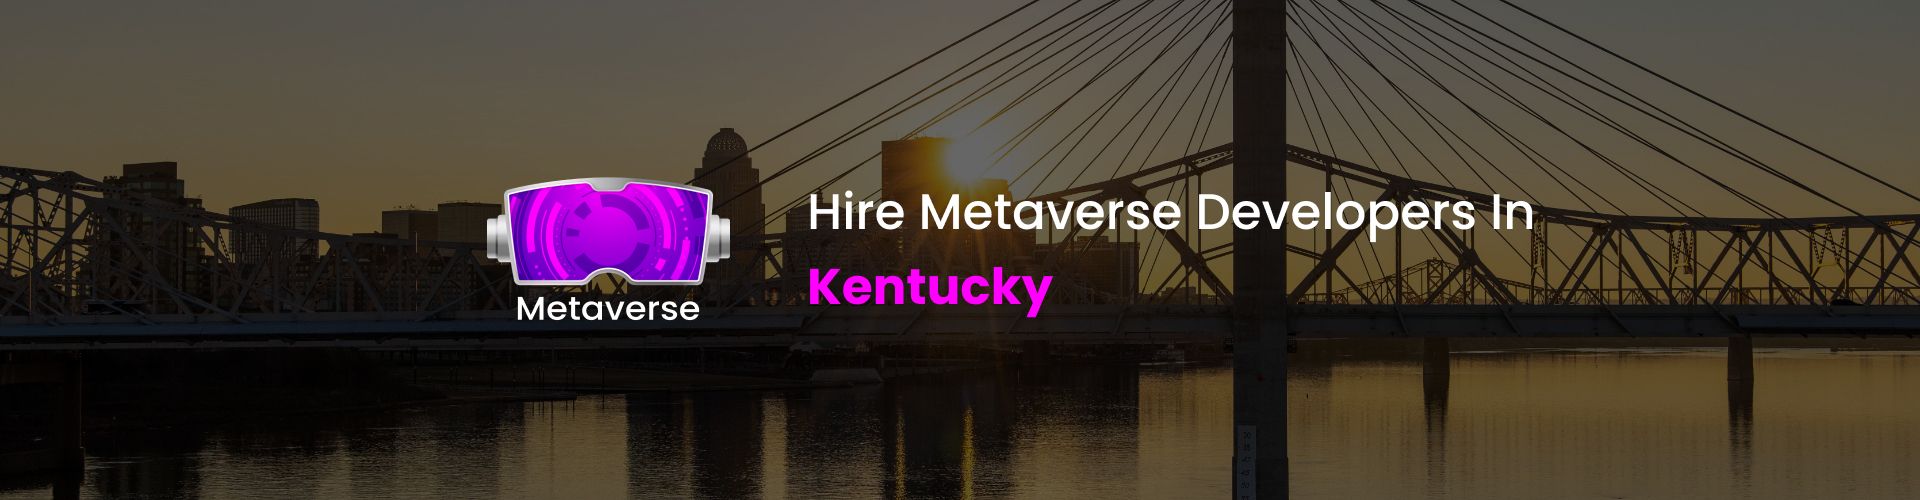 hire metaverse developers in kentucky